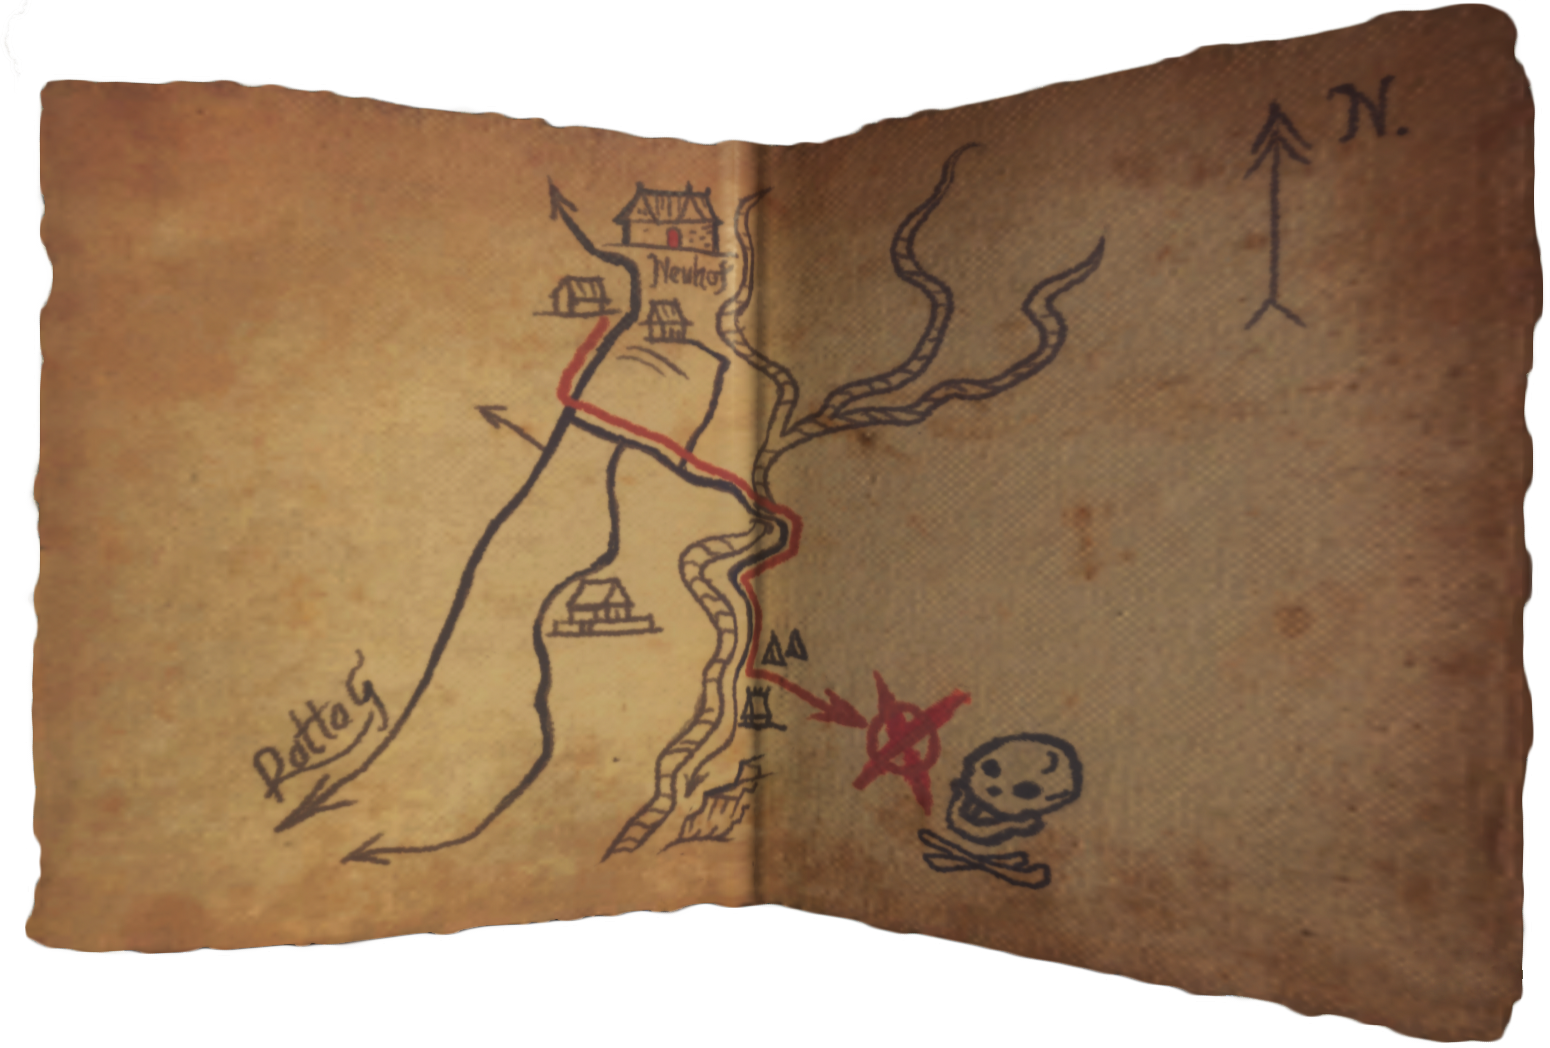 Uralte Karte I | Kingdom Come: Deliverance Wiki | Fandom